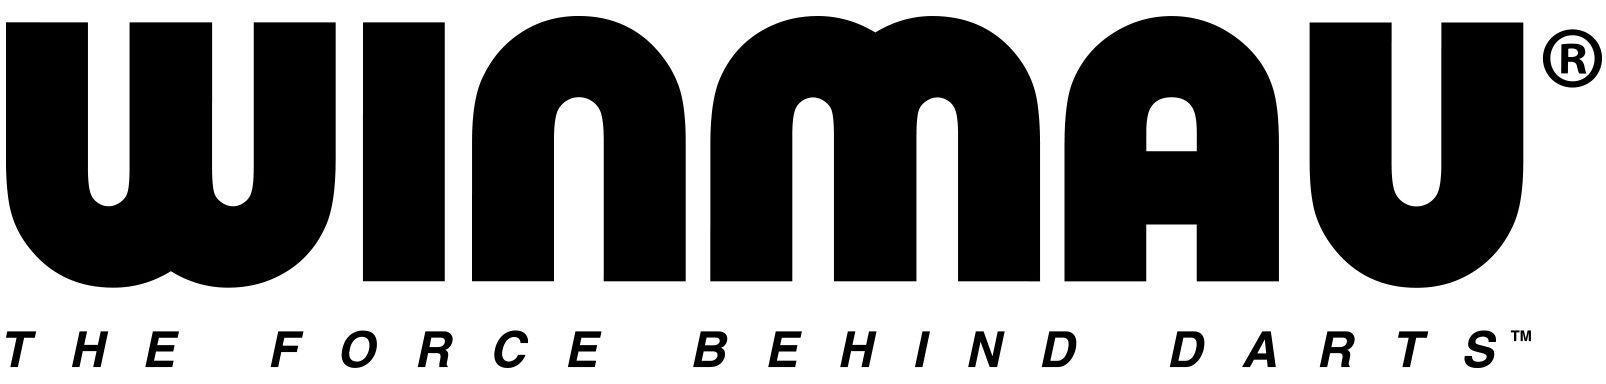 Winmau Logo Black Text With White Backgrounf